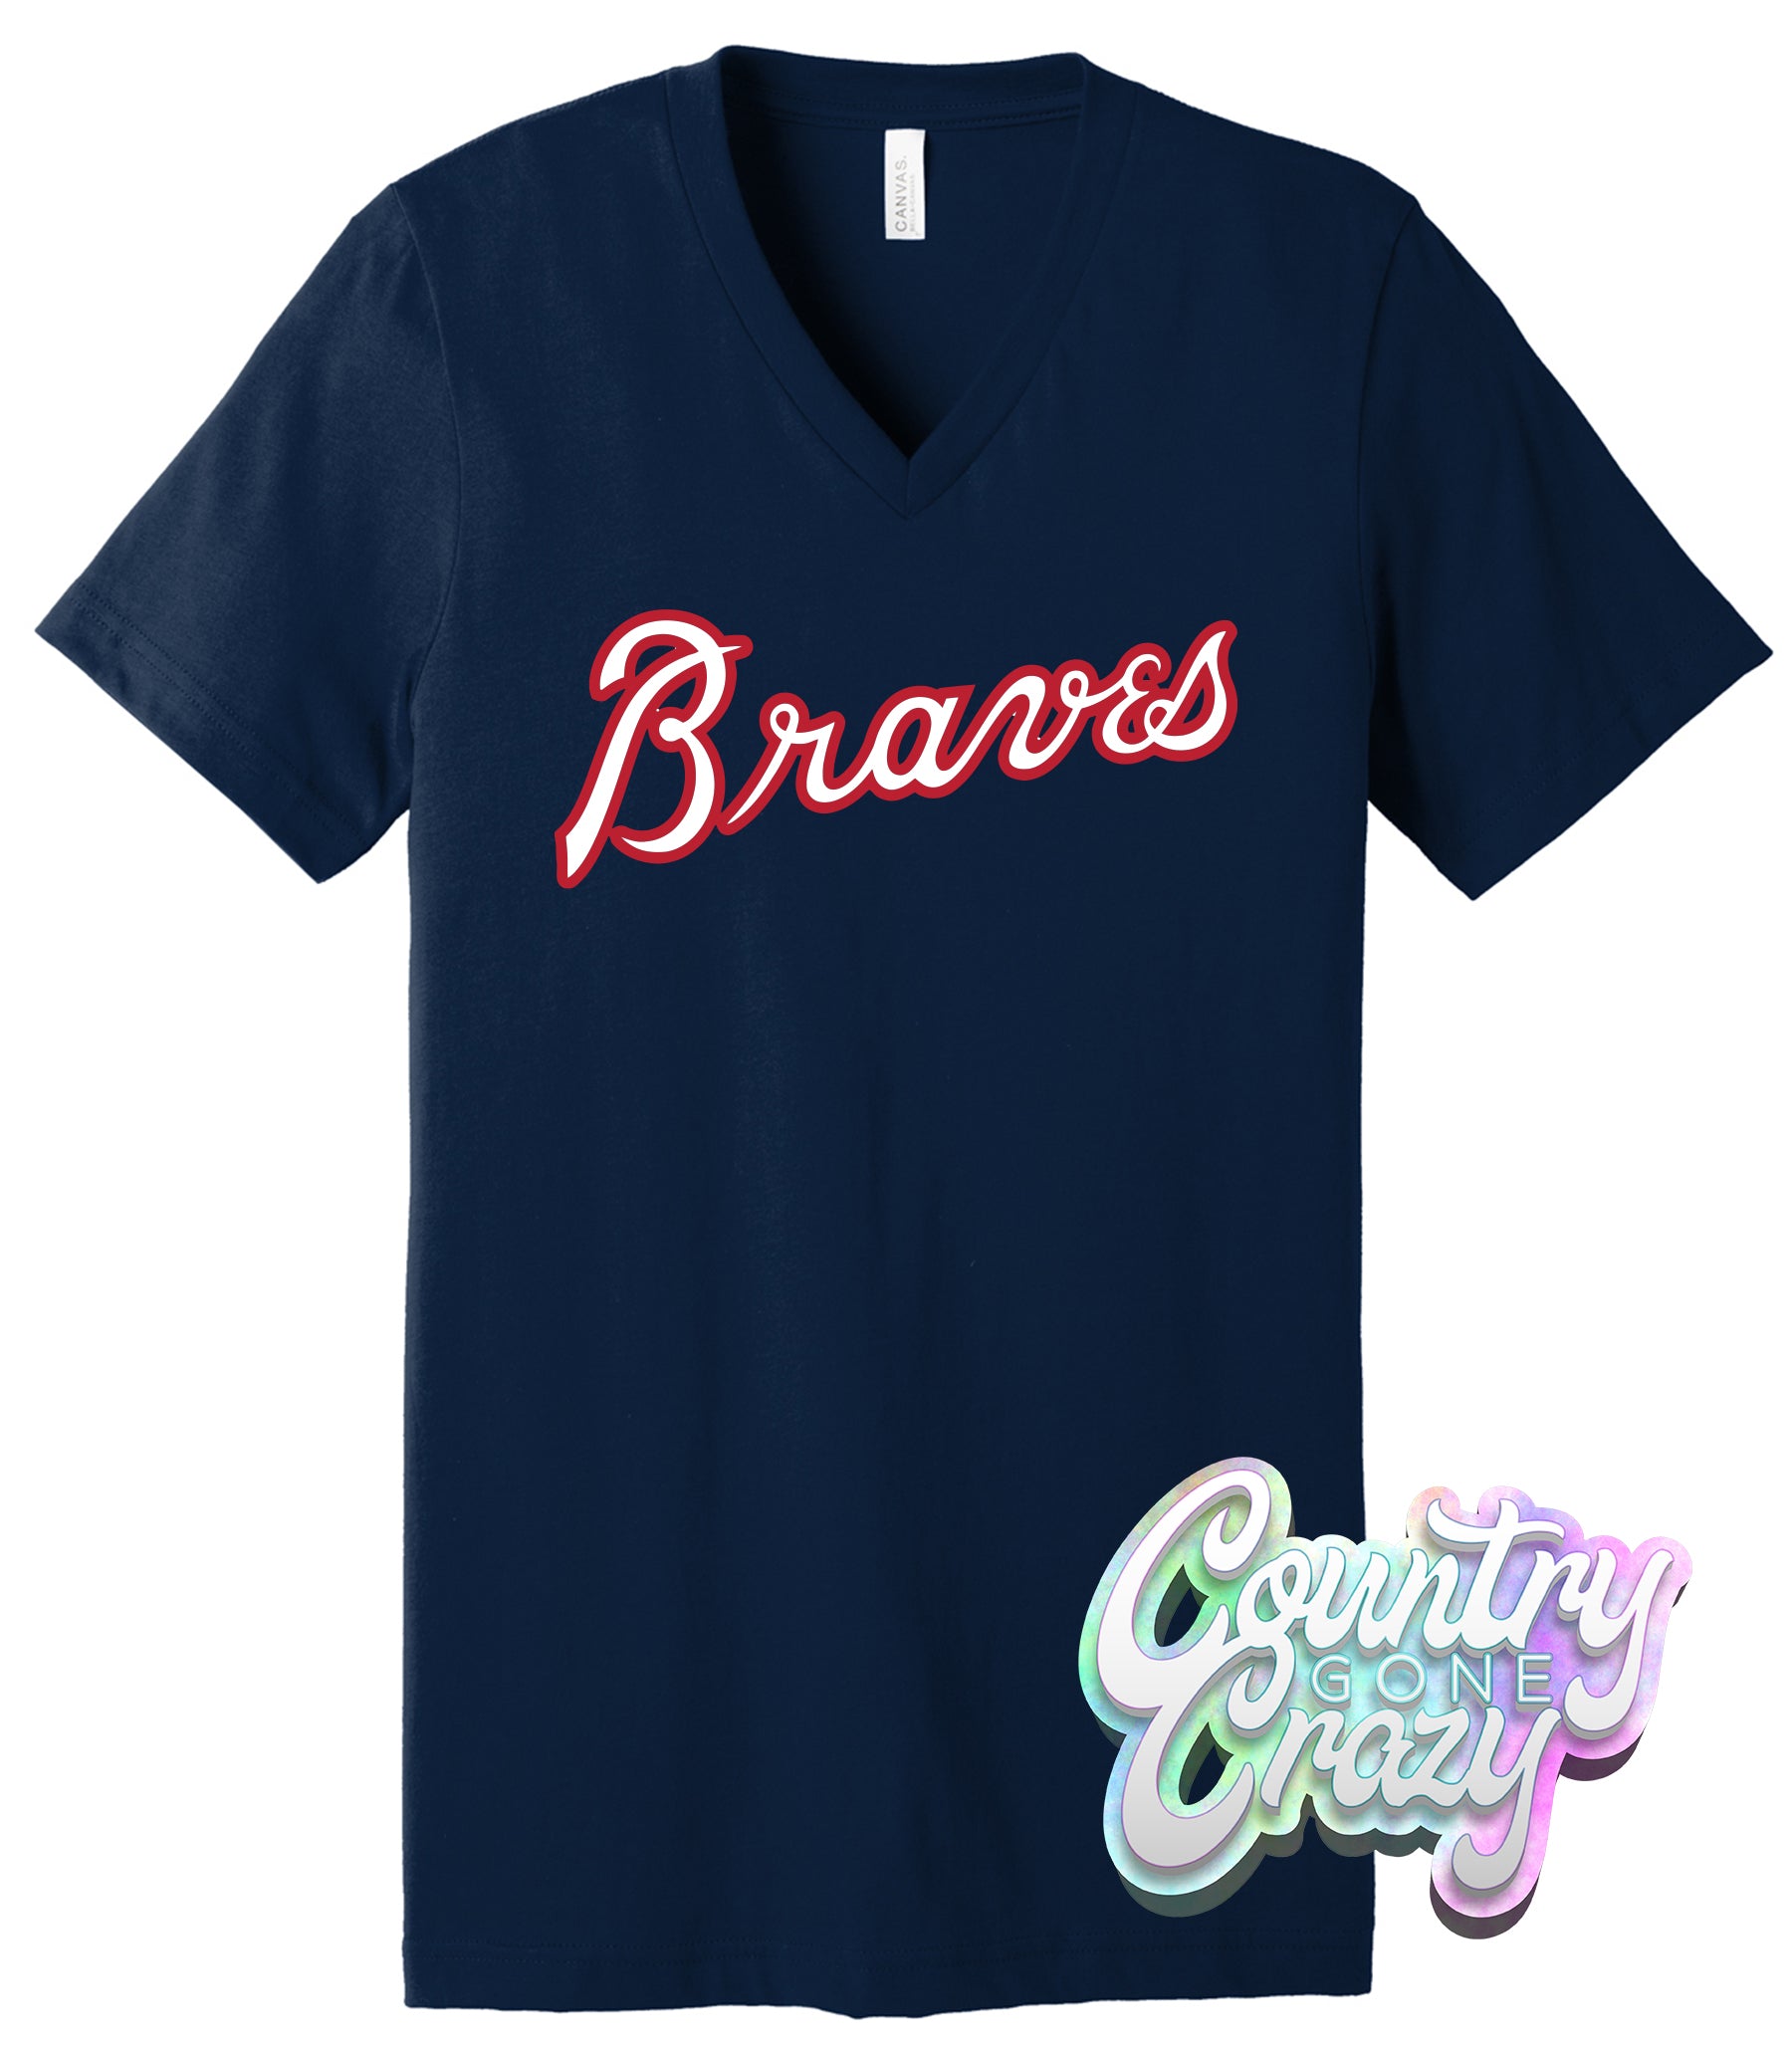 Atlanta Braves Country T shirt - Cheap Custom Made T shirts by